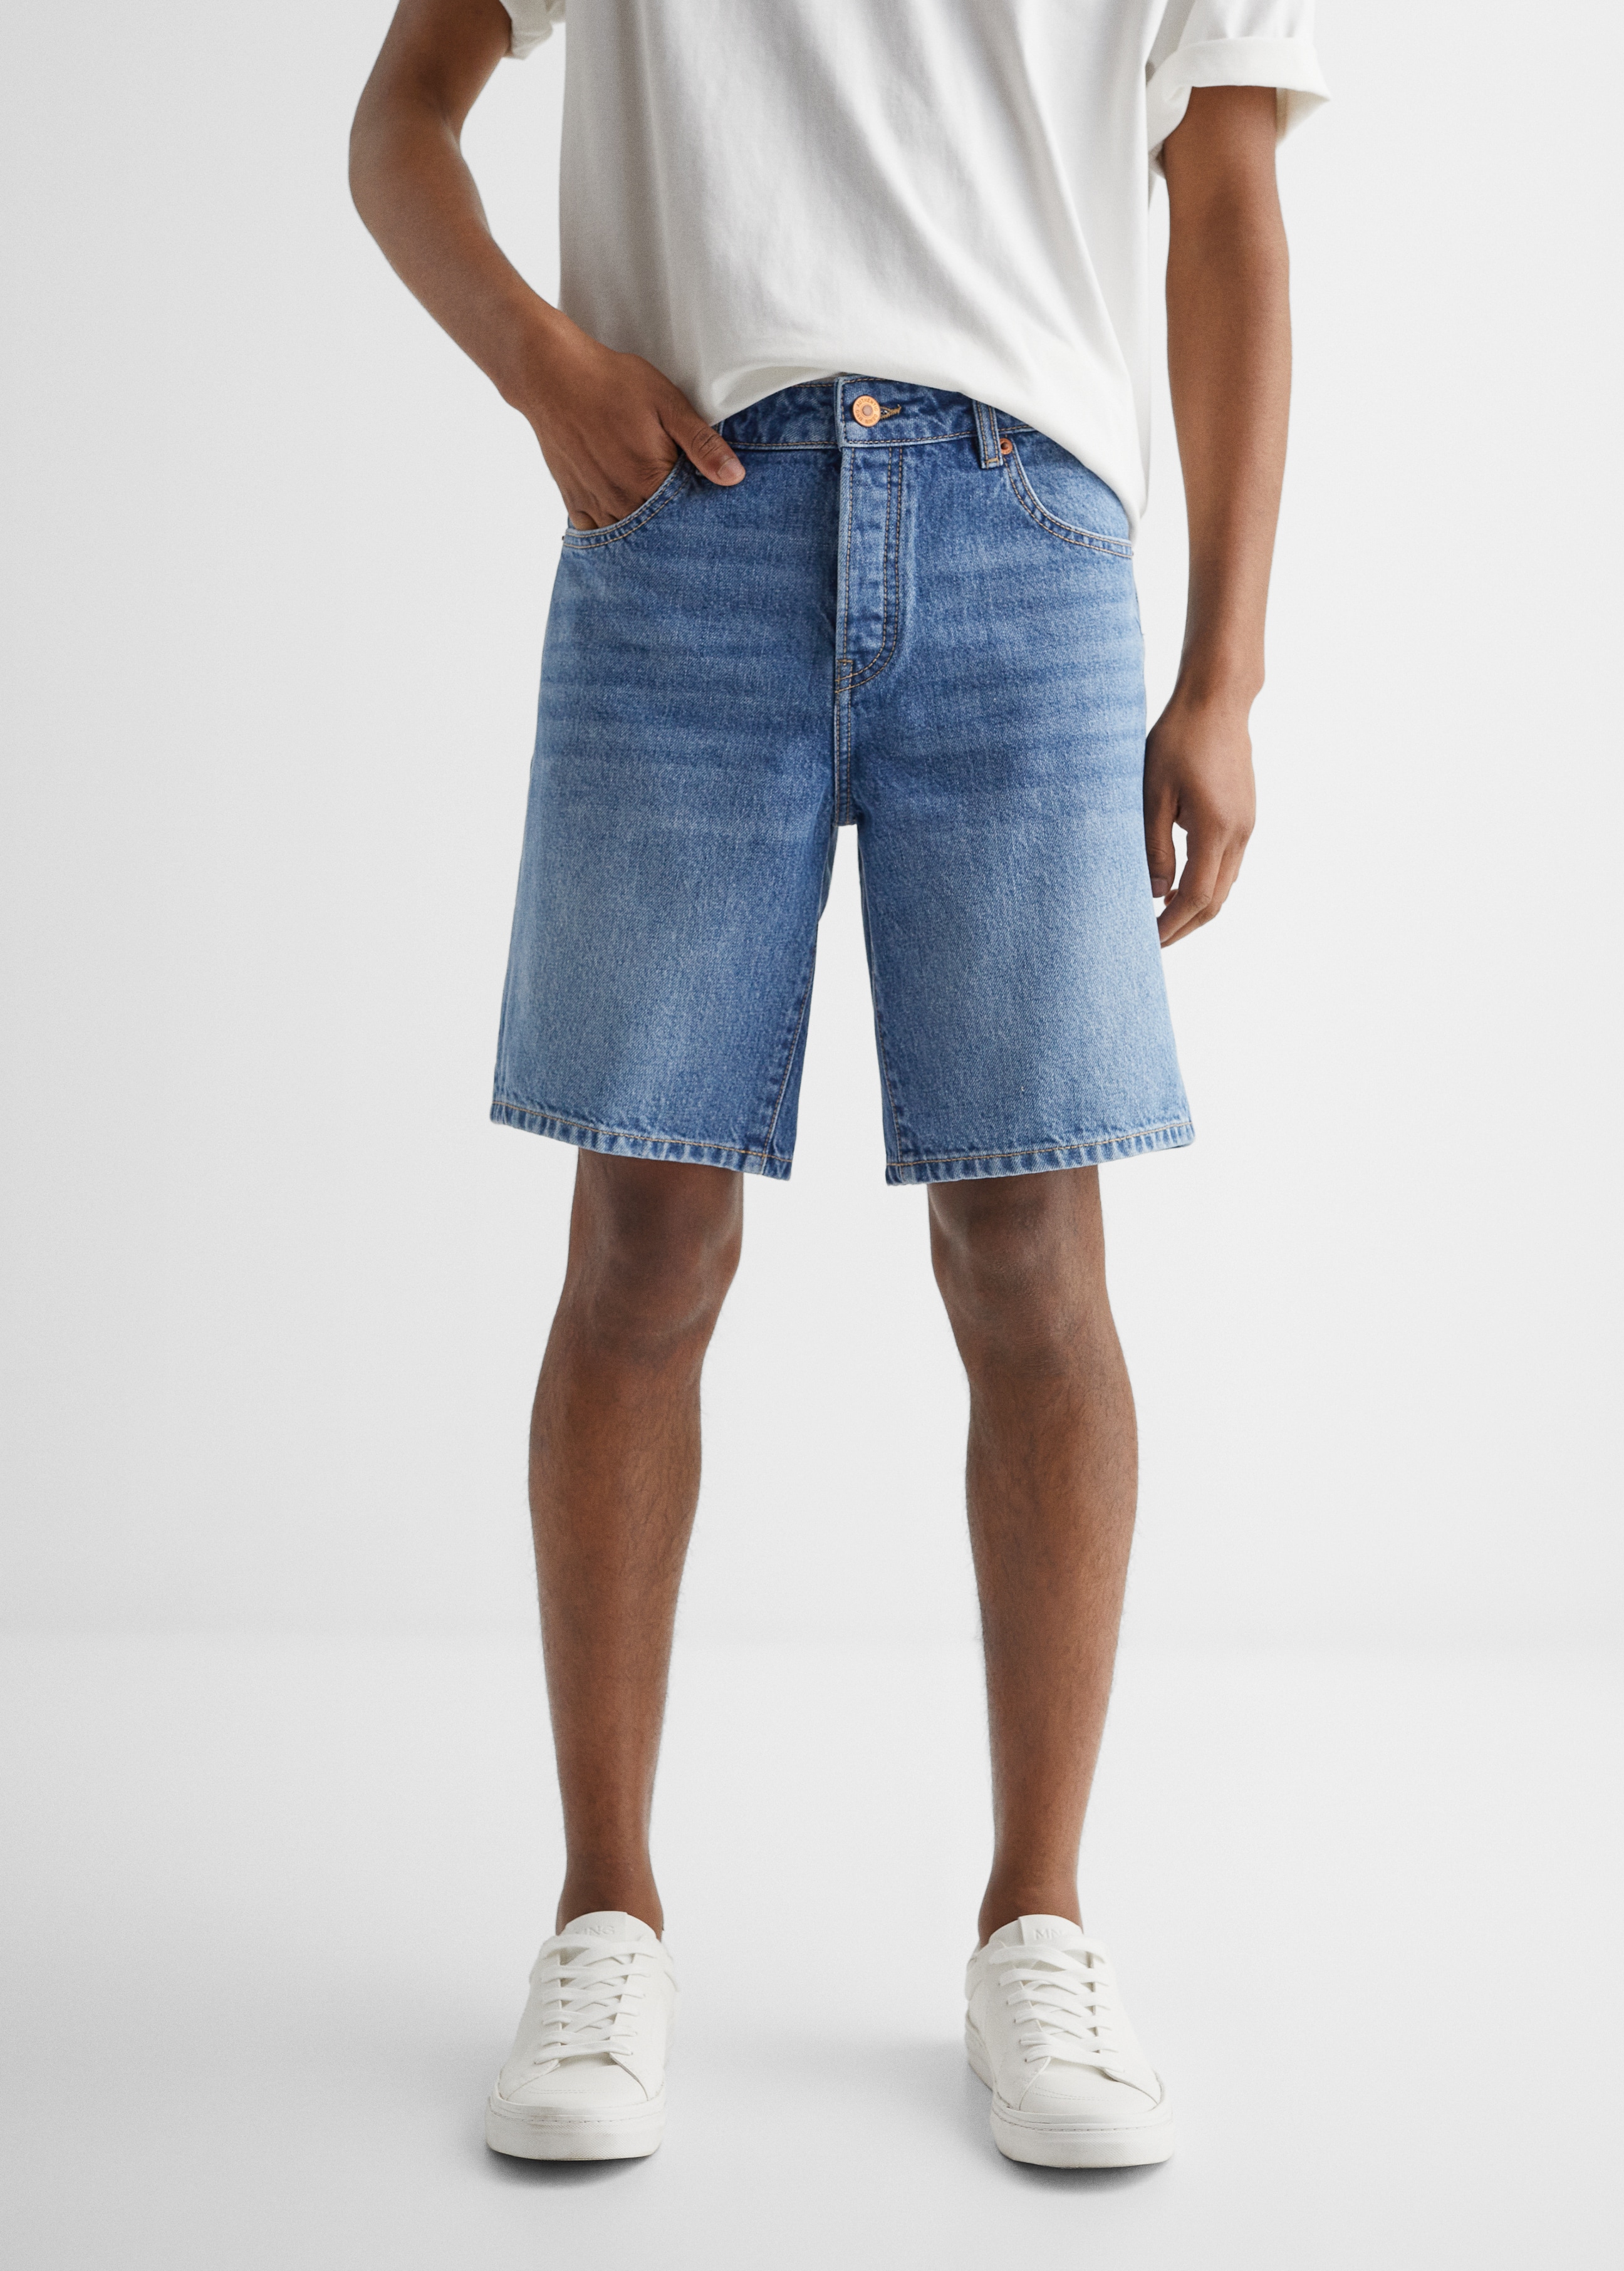 Cotton denim shorts - Details of the article 6